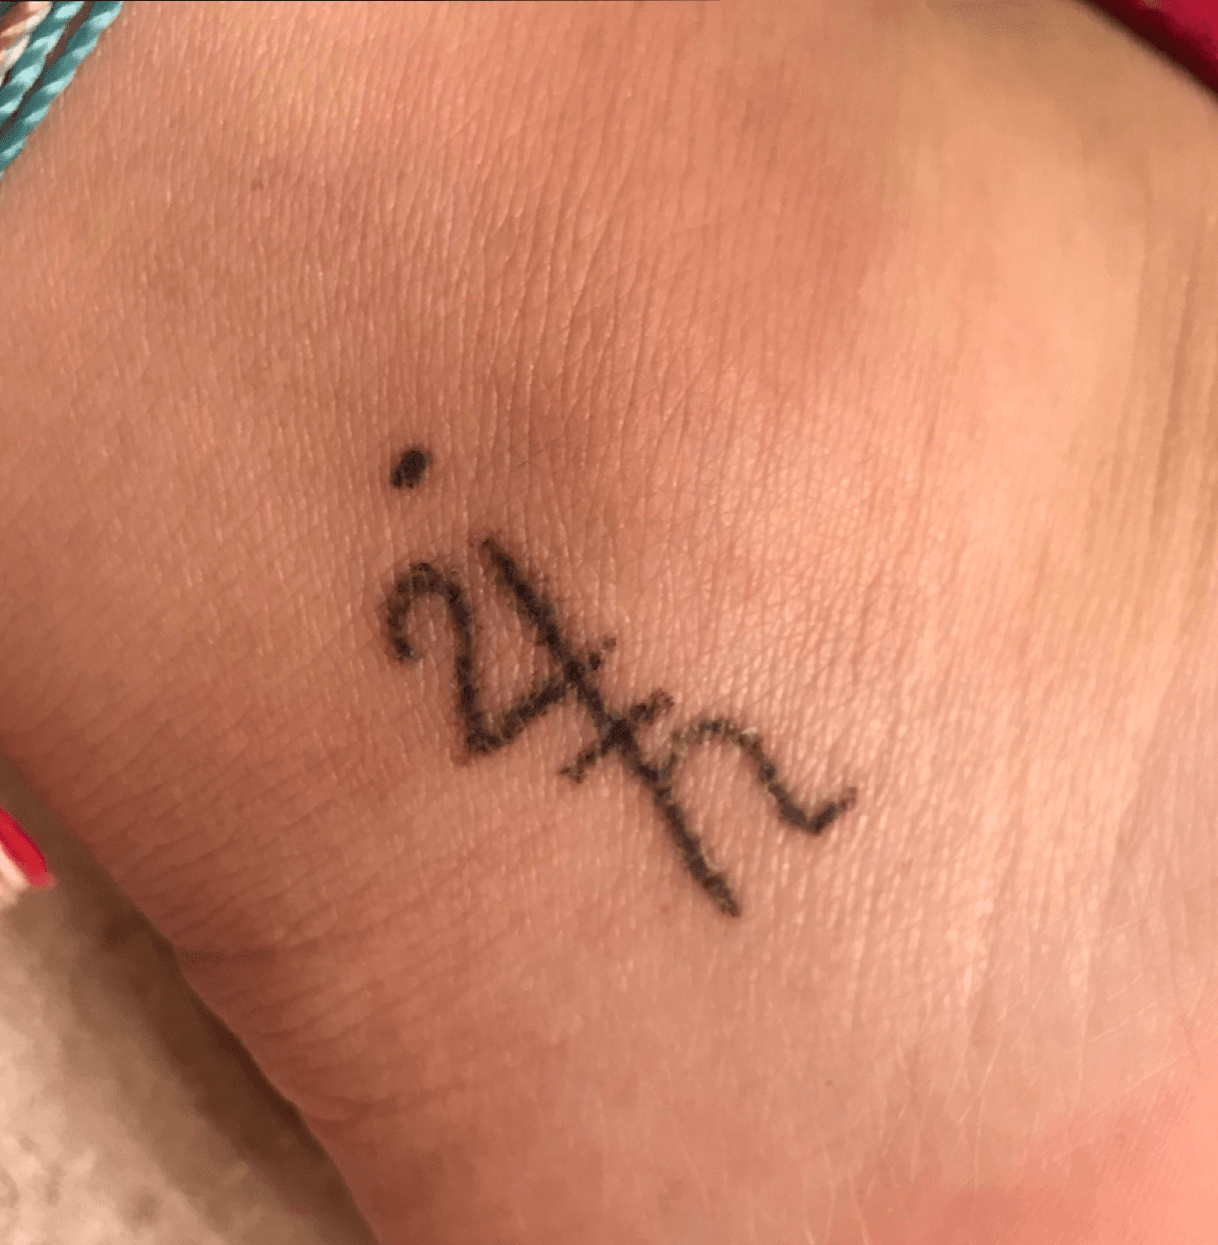 Tattoo Flash of Symbols